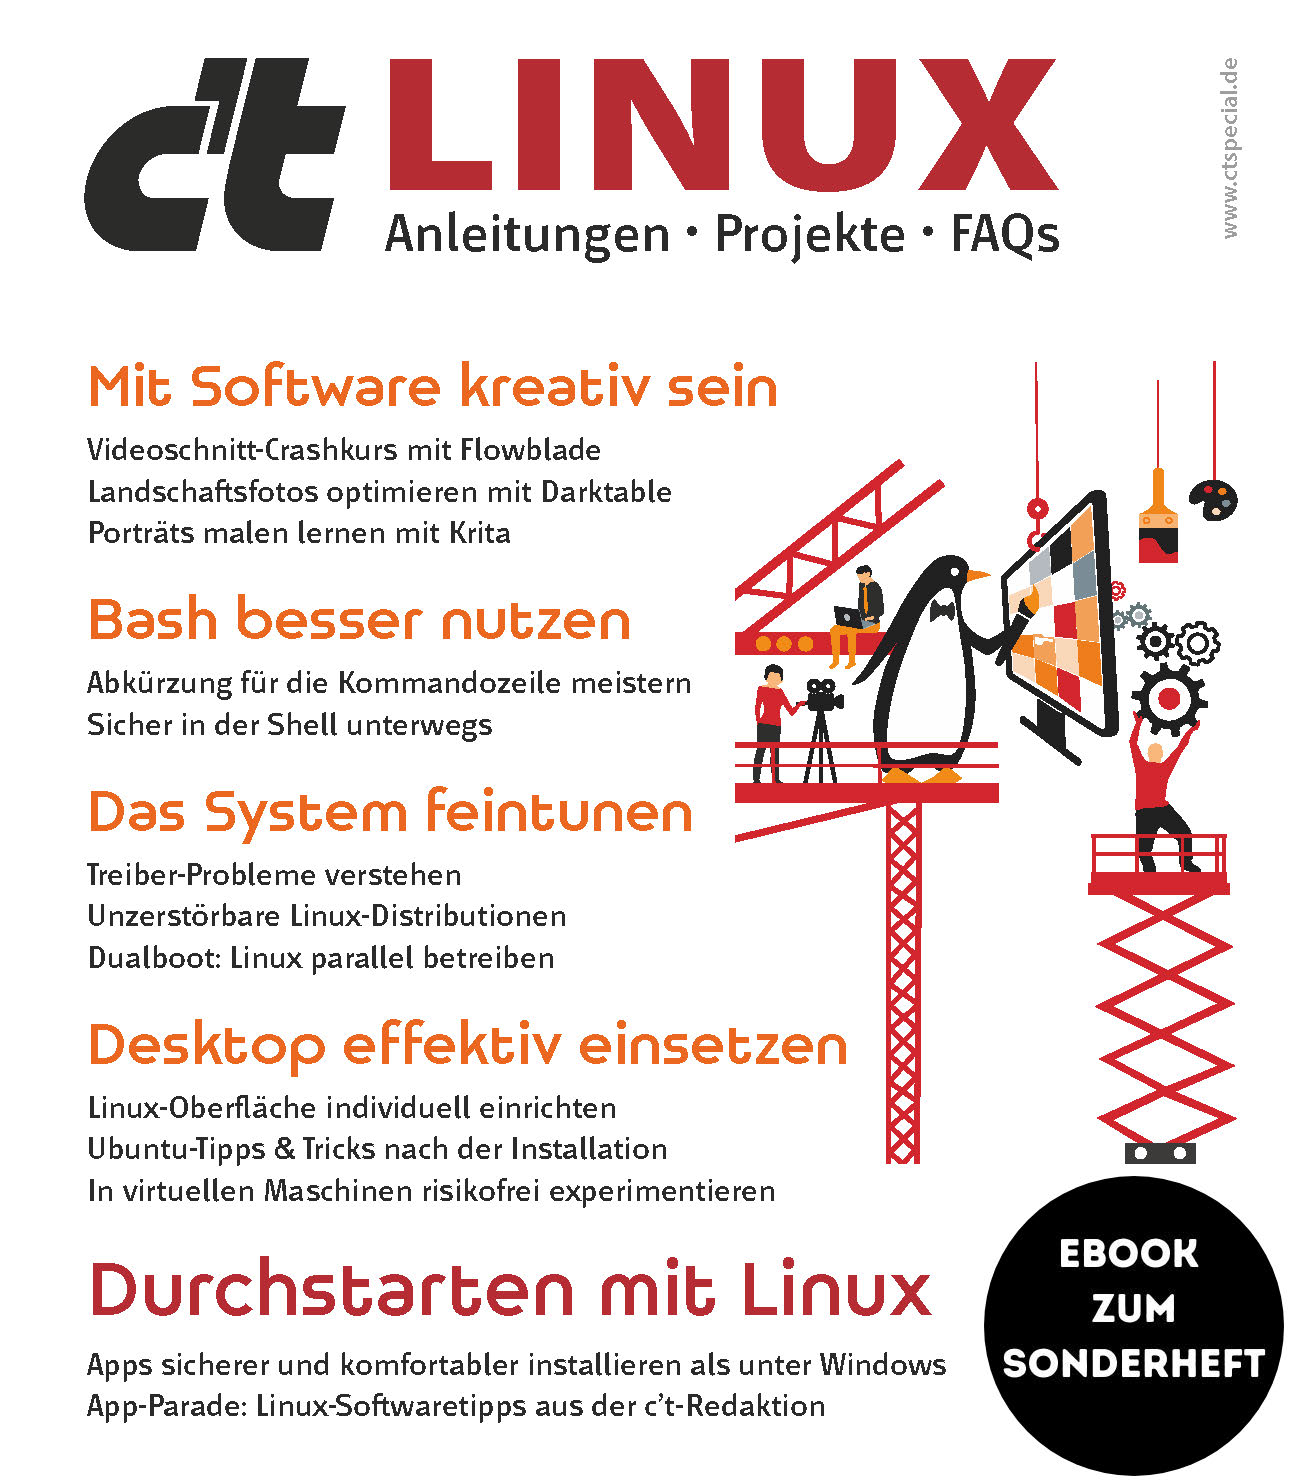 c't Linux 21 (eBook zum Sonderheft)